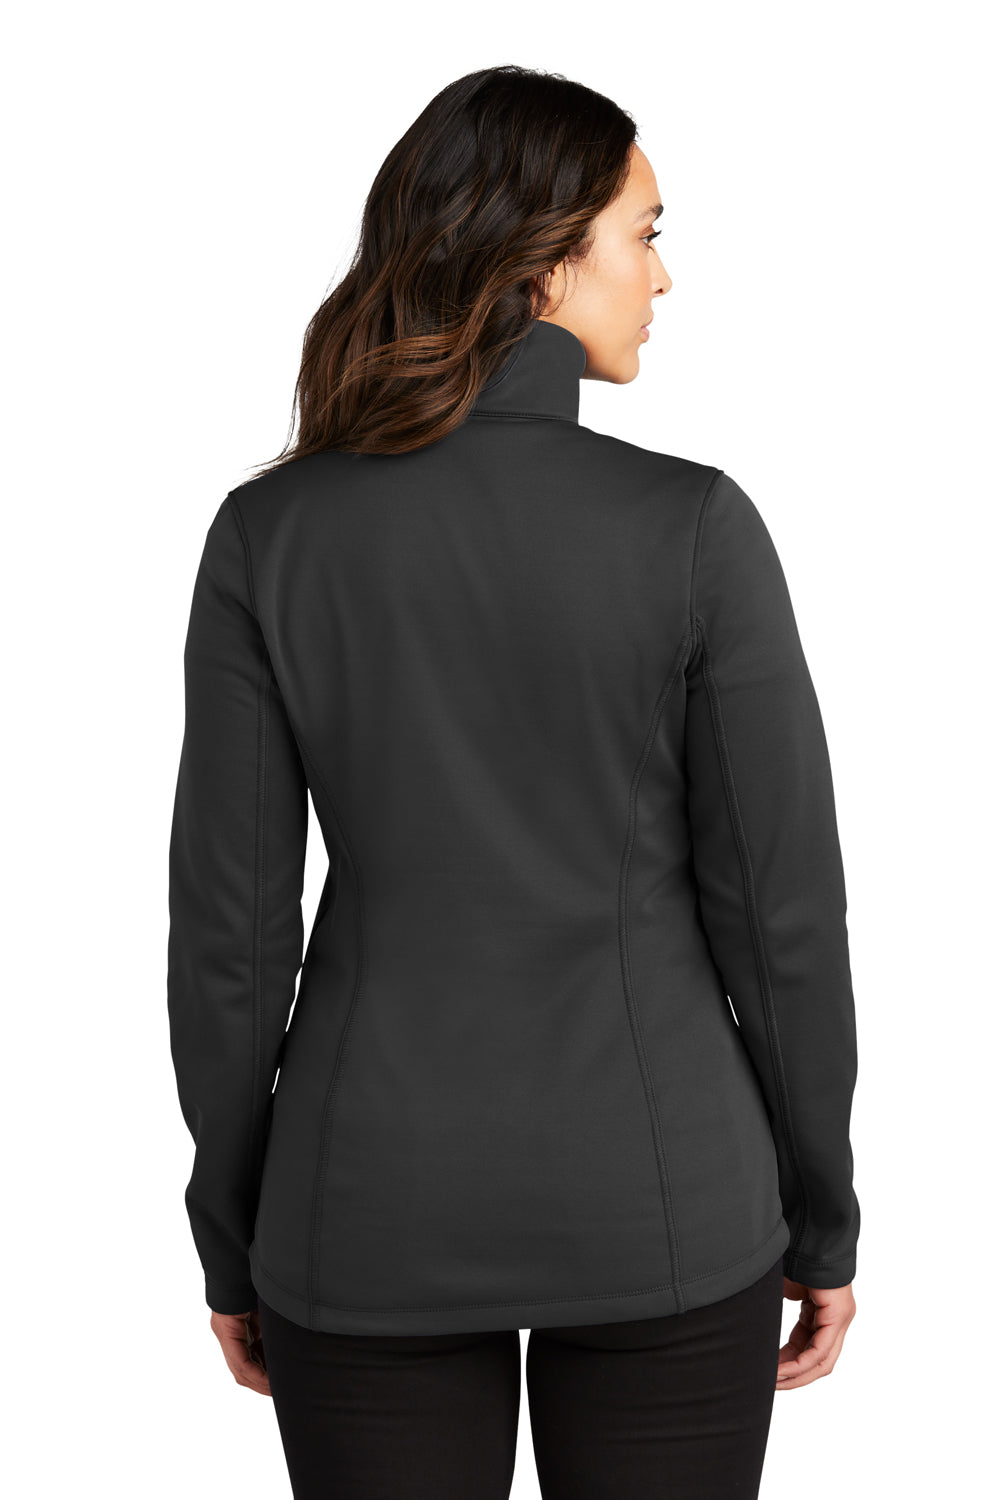 Port Authority L804 Womens Smooth Fleece 1/4 Zip Hooded Jacket Deep Black Back